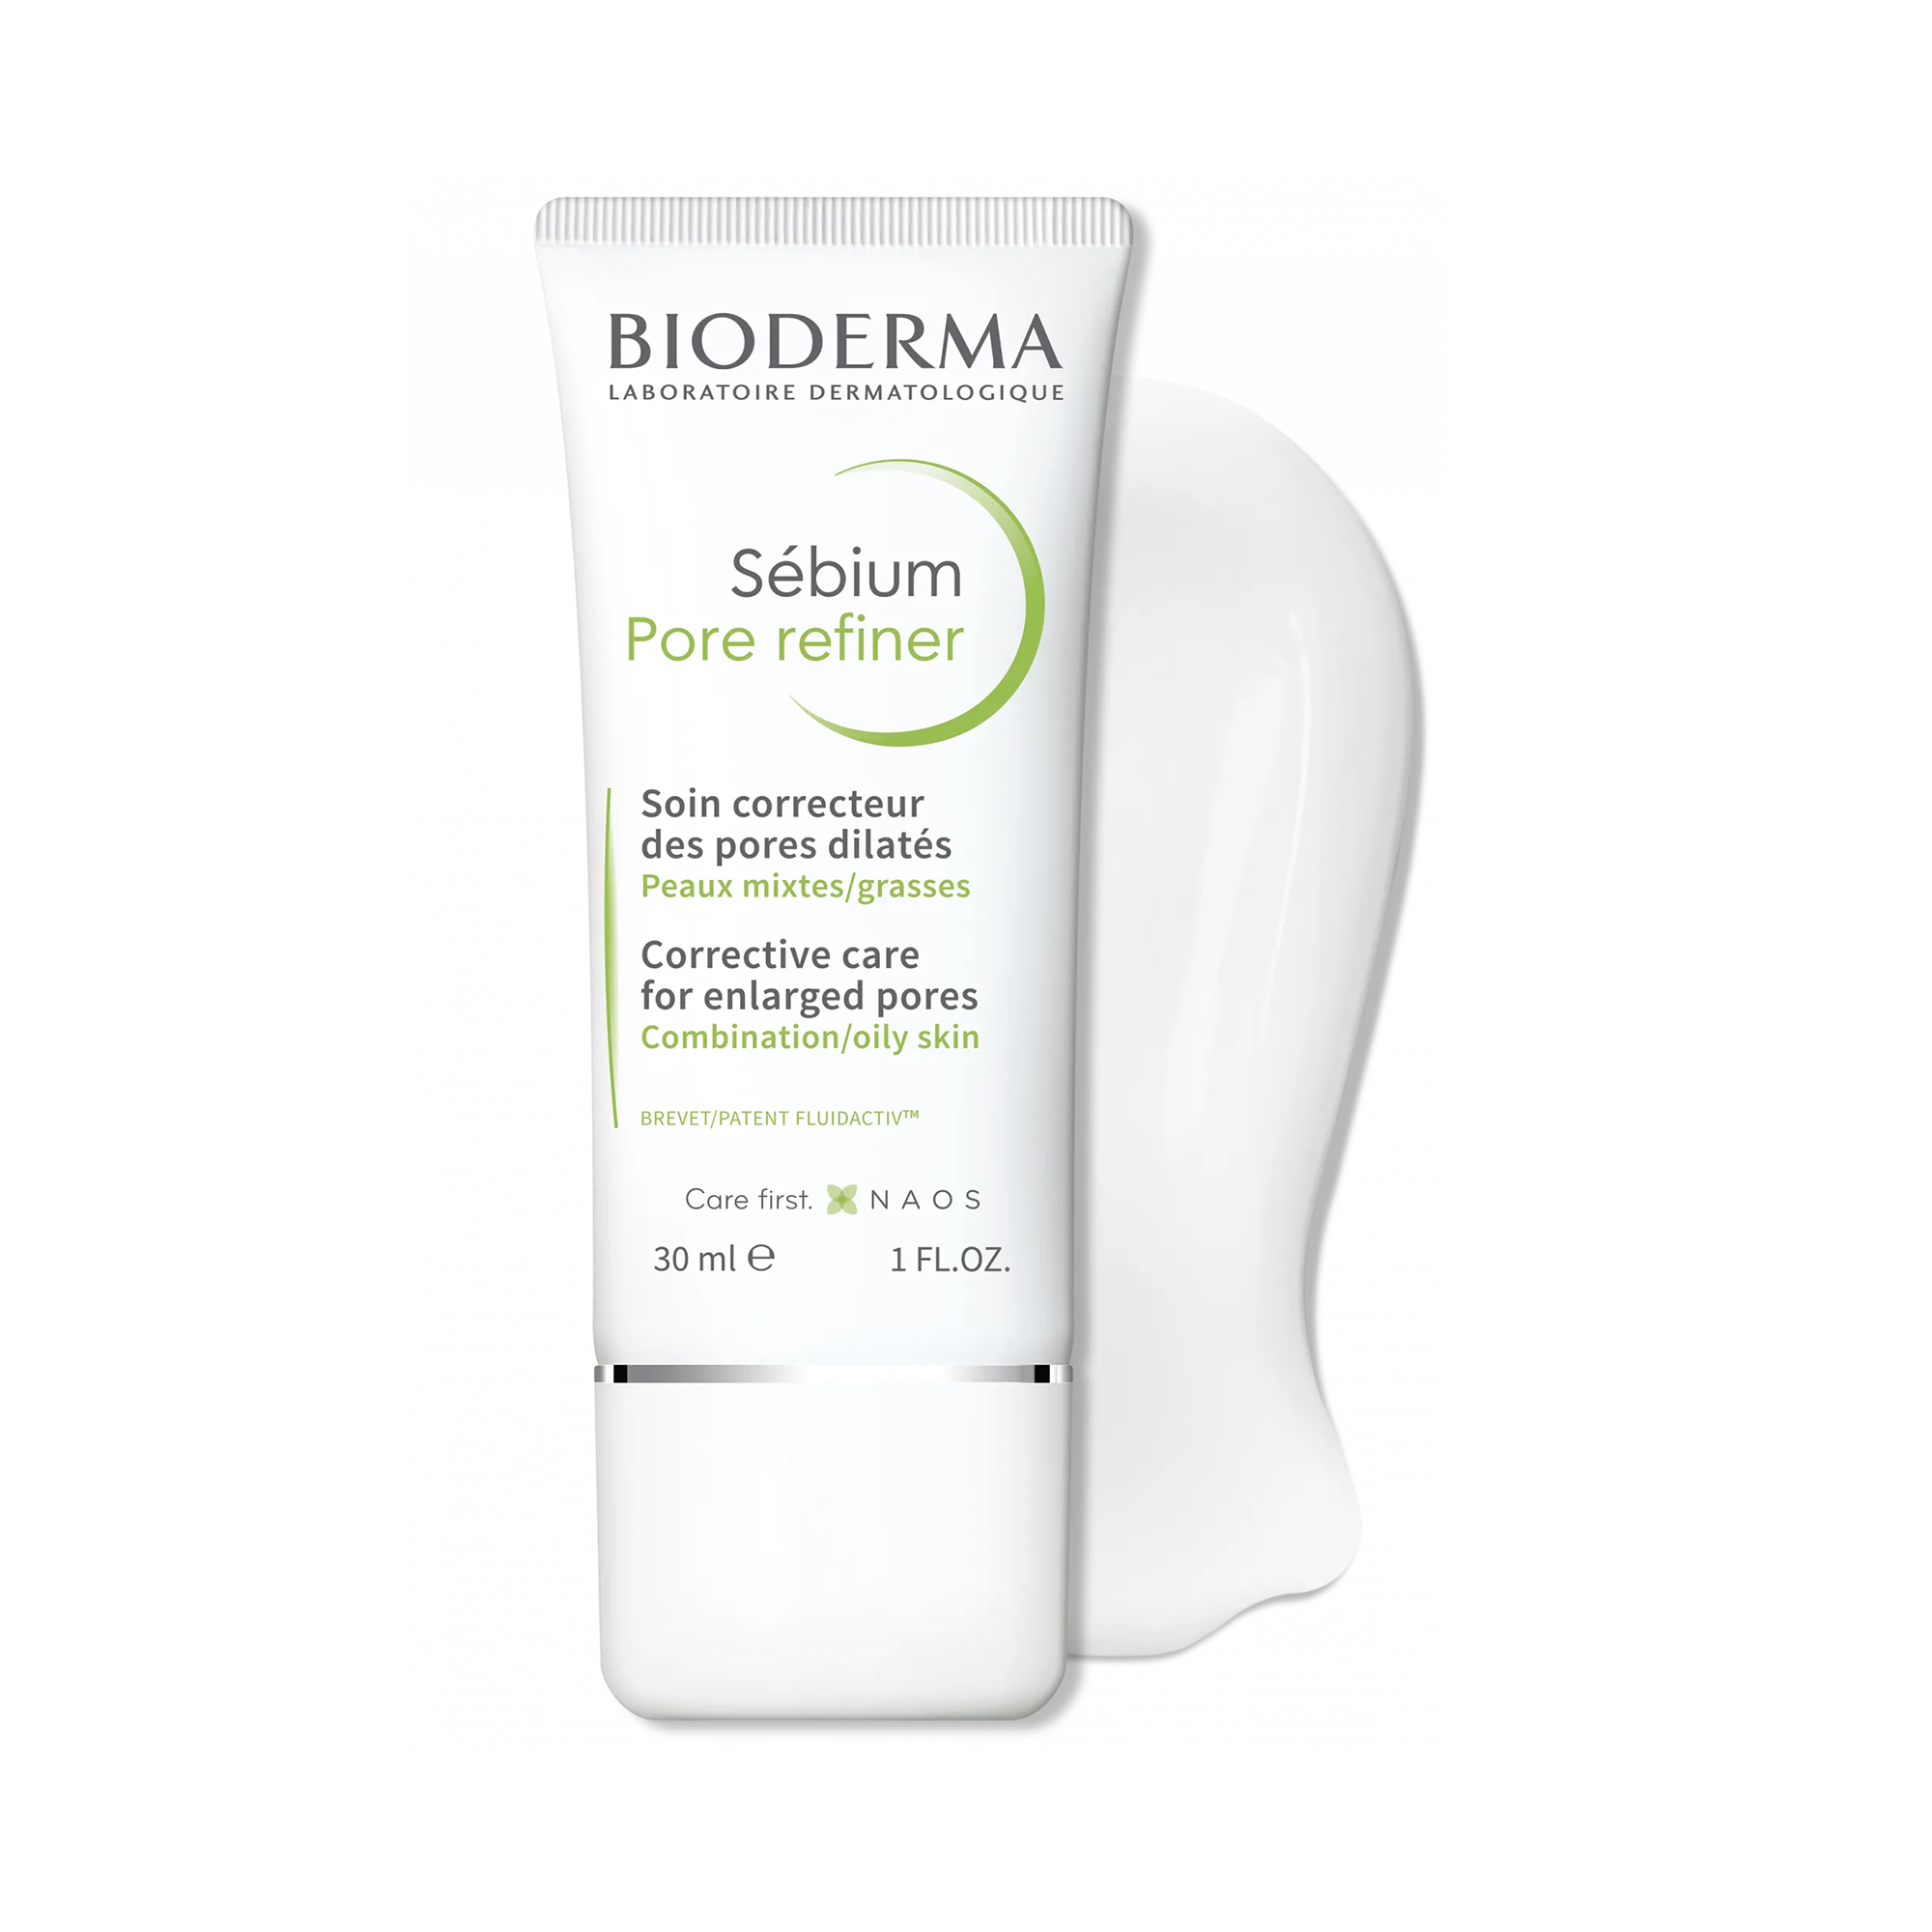 Bioderma USA  Bioderma SEBIUM Pore Refiner – Le French Skin Care